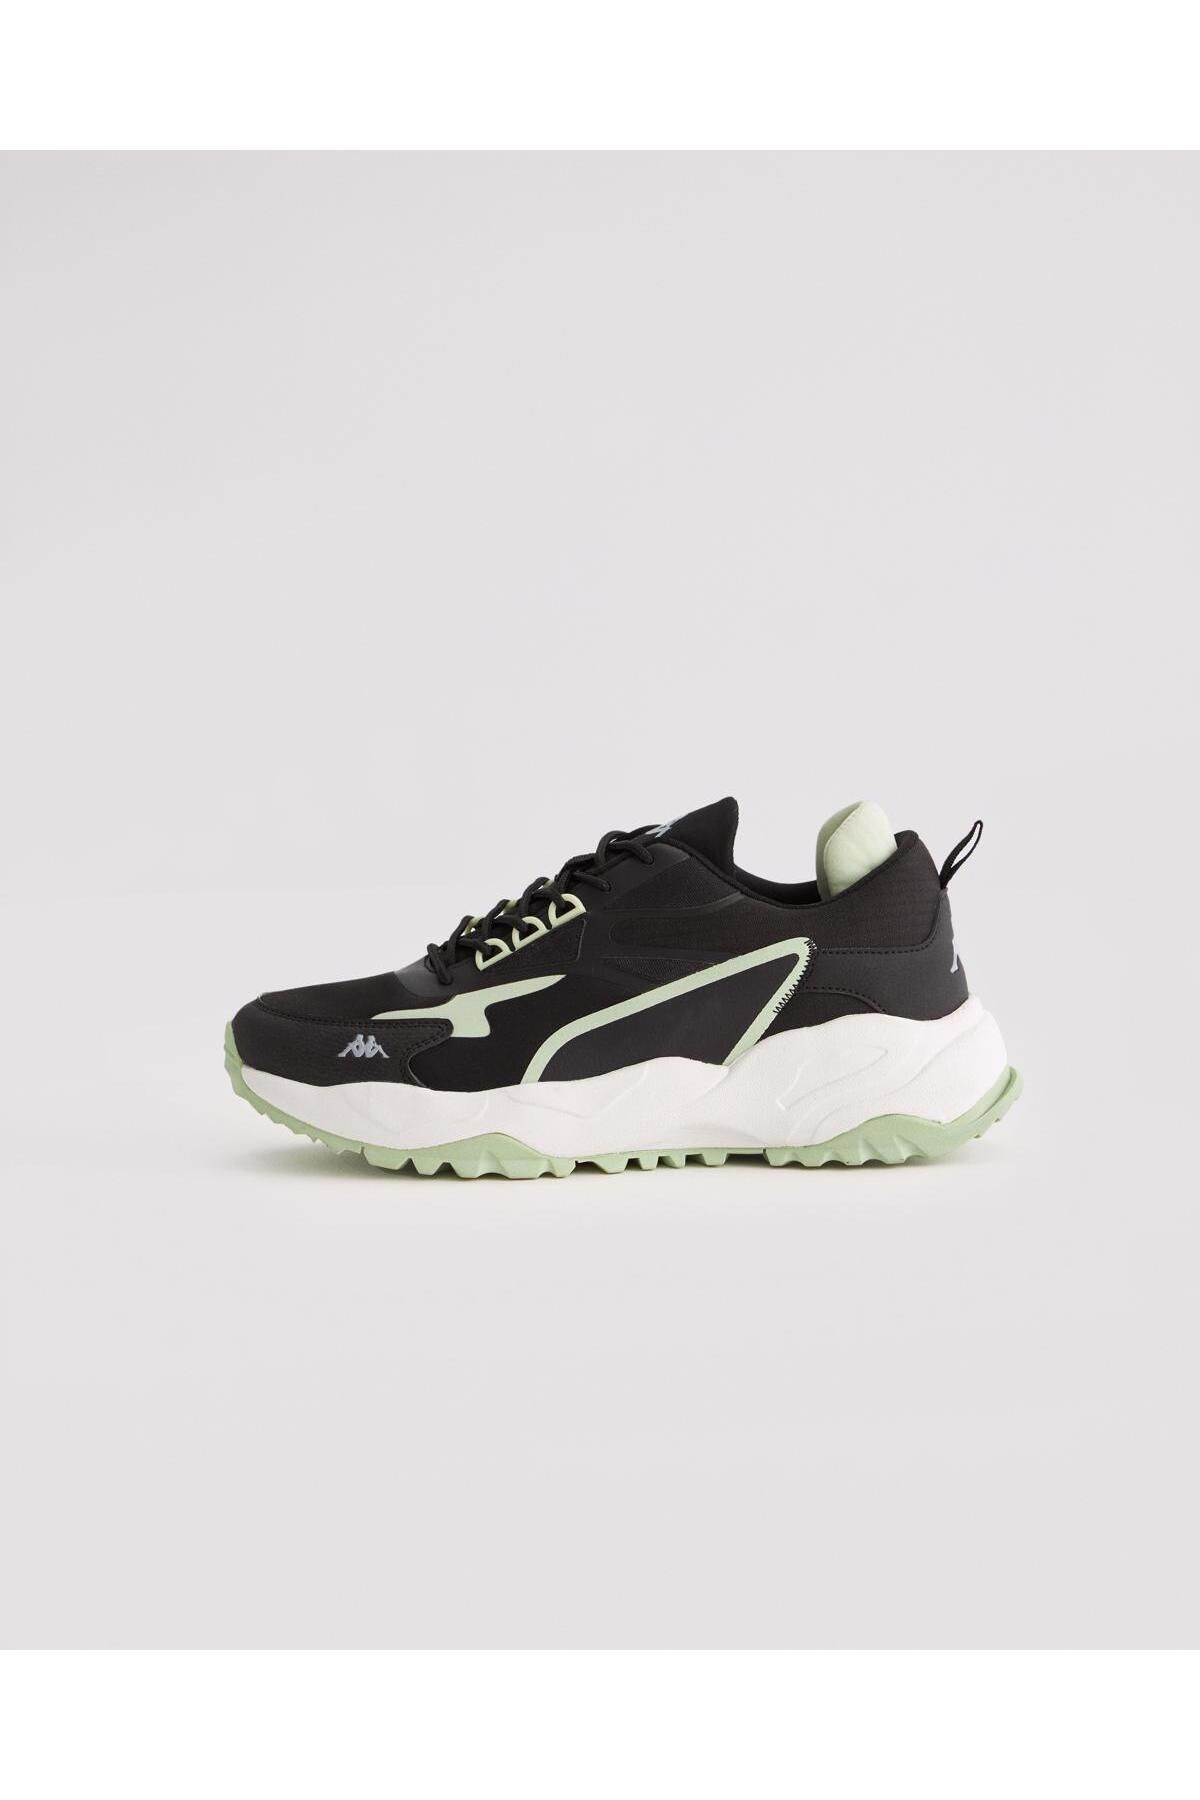 Kappa Authentic Altin 3 Unisex Siyah-mint Yeşili Sneaker Fiyatı, Yorumları  - Trendyol | 